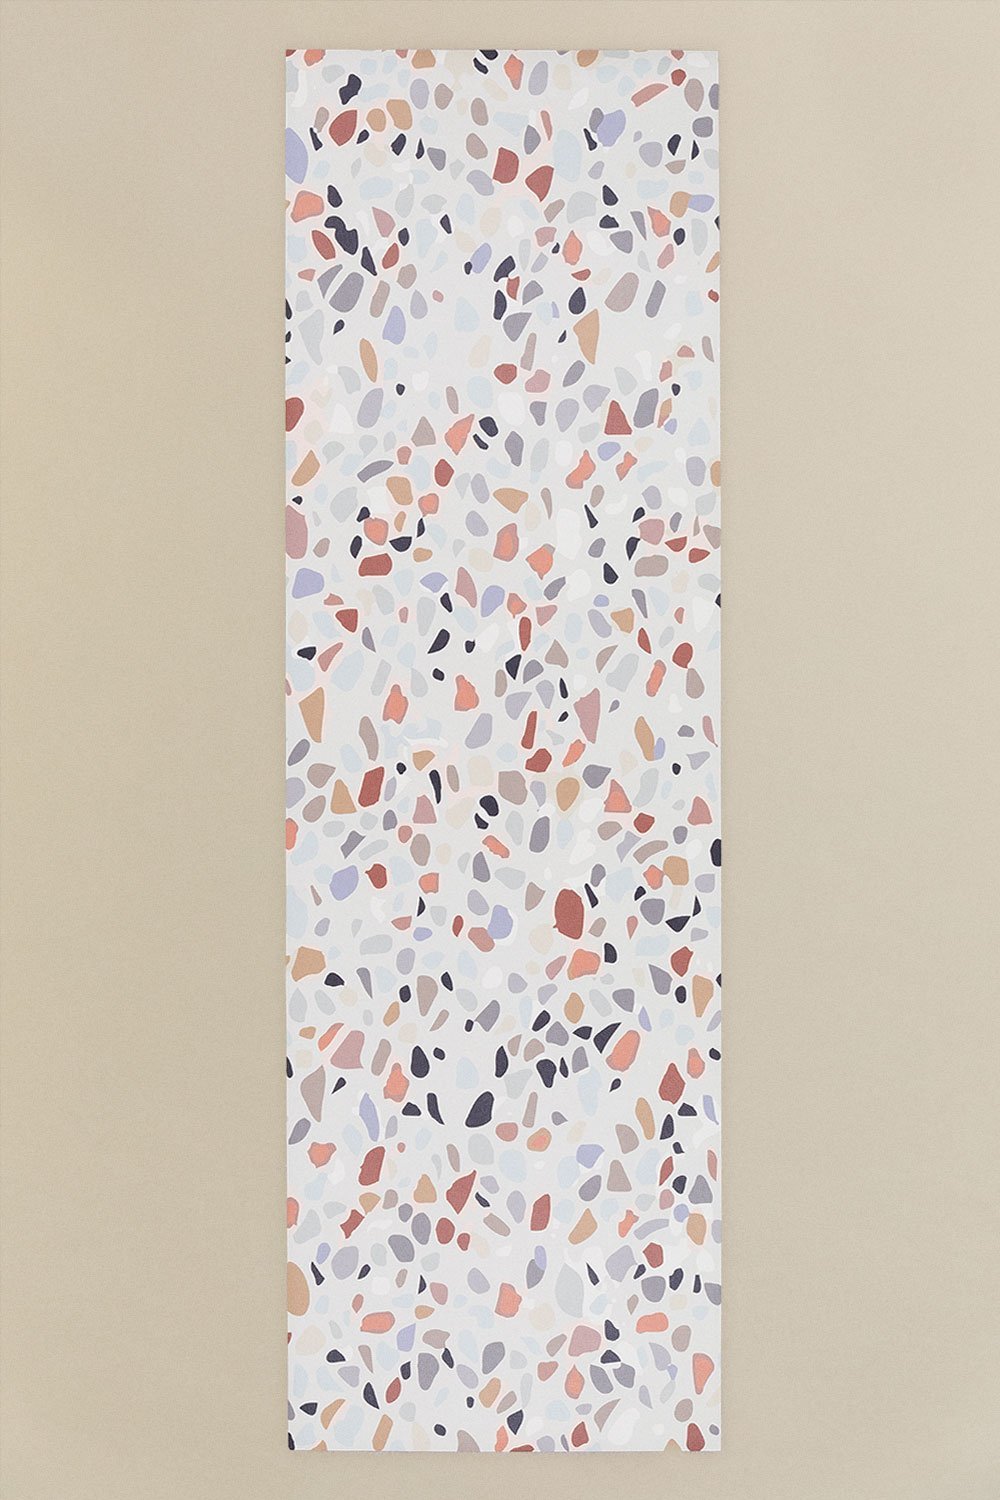 Tapis Vinyle (200x60 cm) Zirab, image de la galerie 1